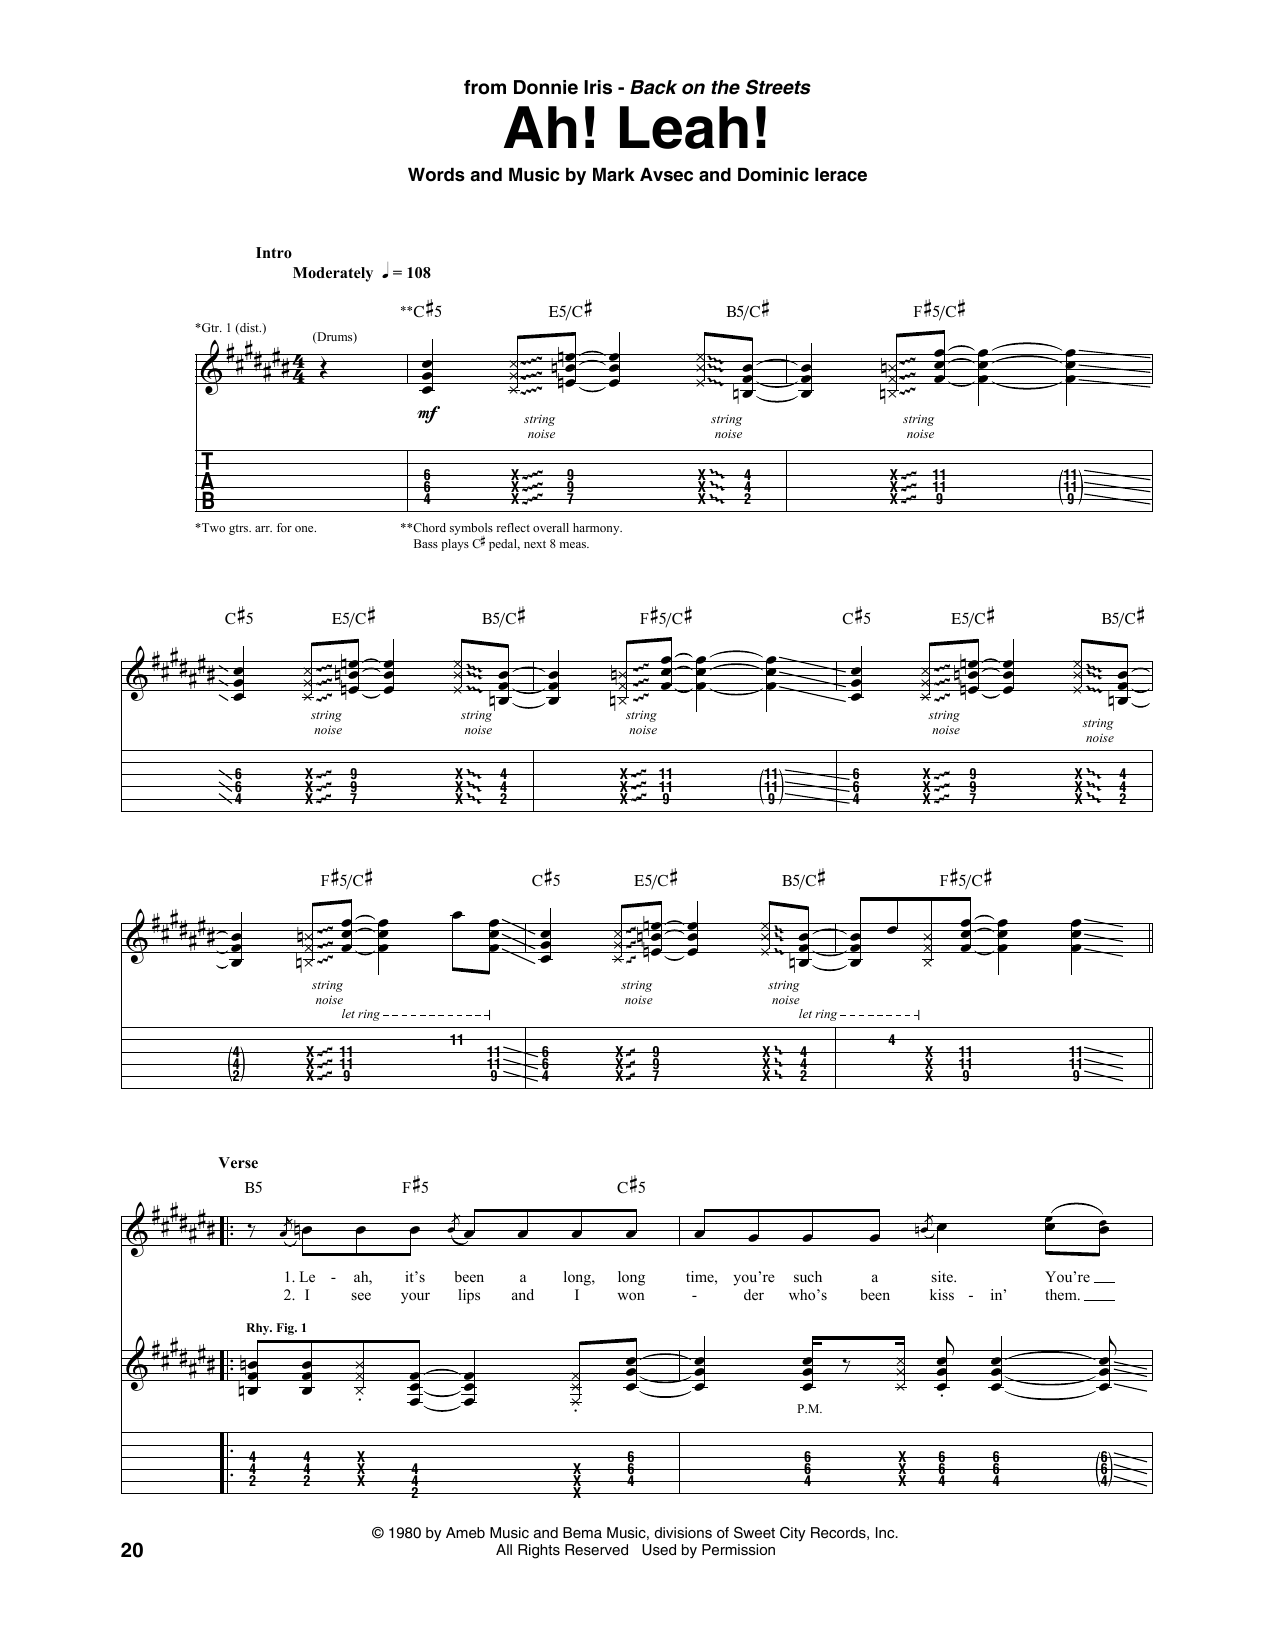 Donnie Iris Ah! Leah! Sheet Music Notes & Chords for Guitar Tab - Download or Print PDF